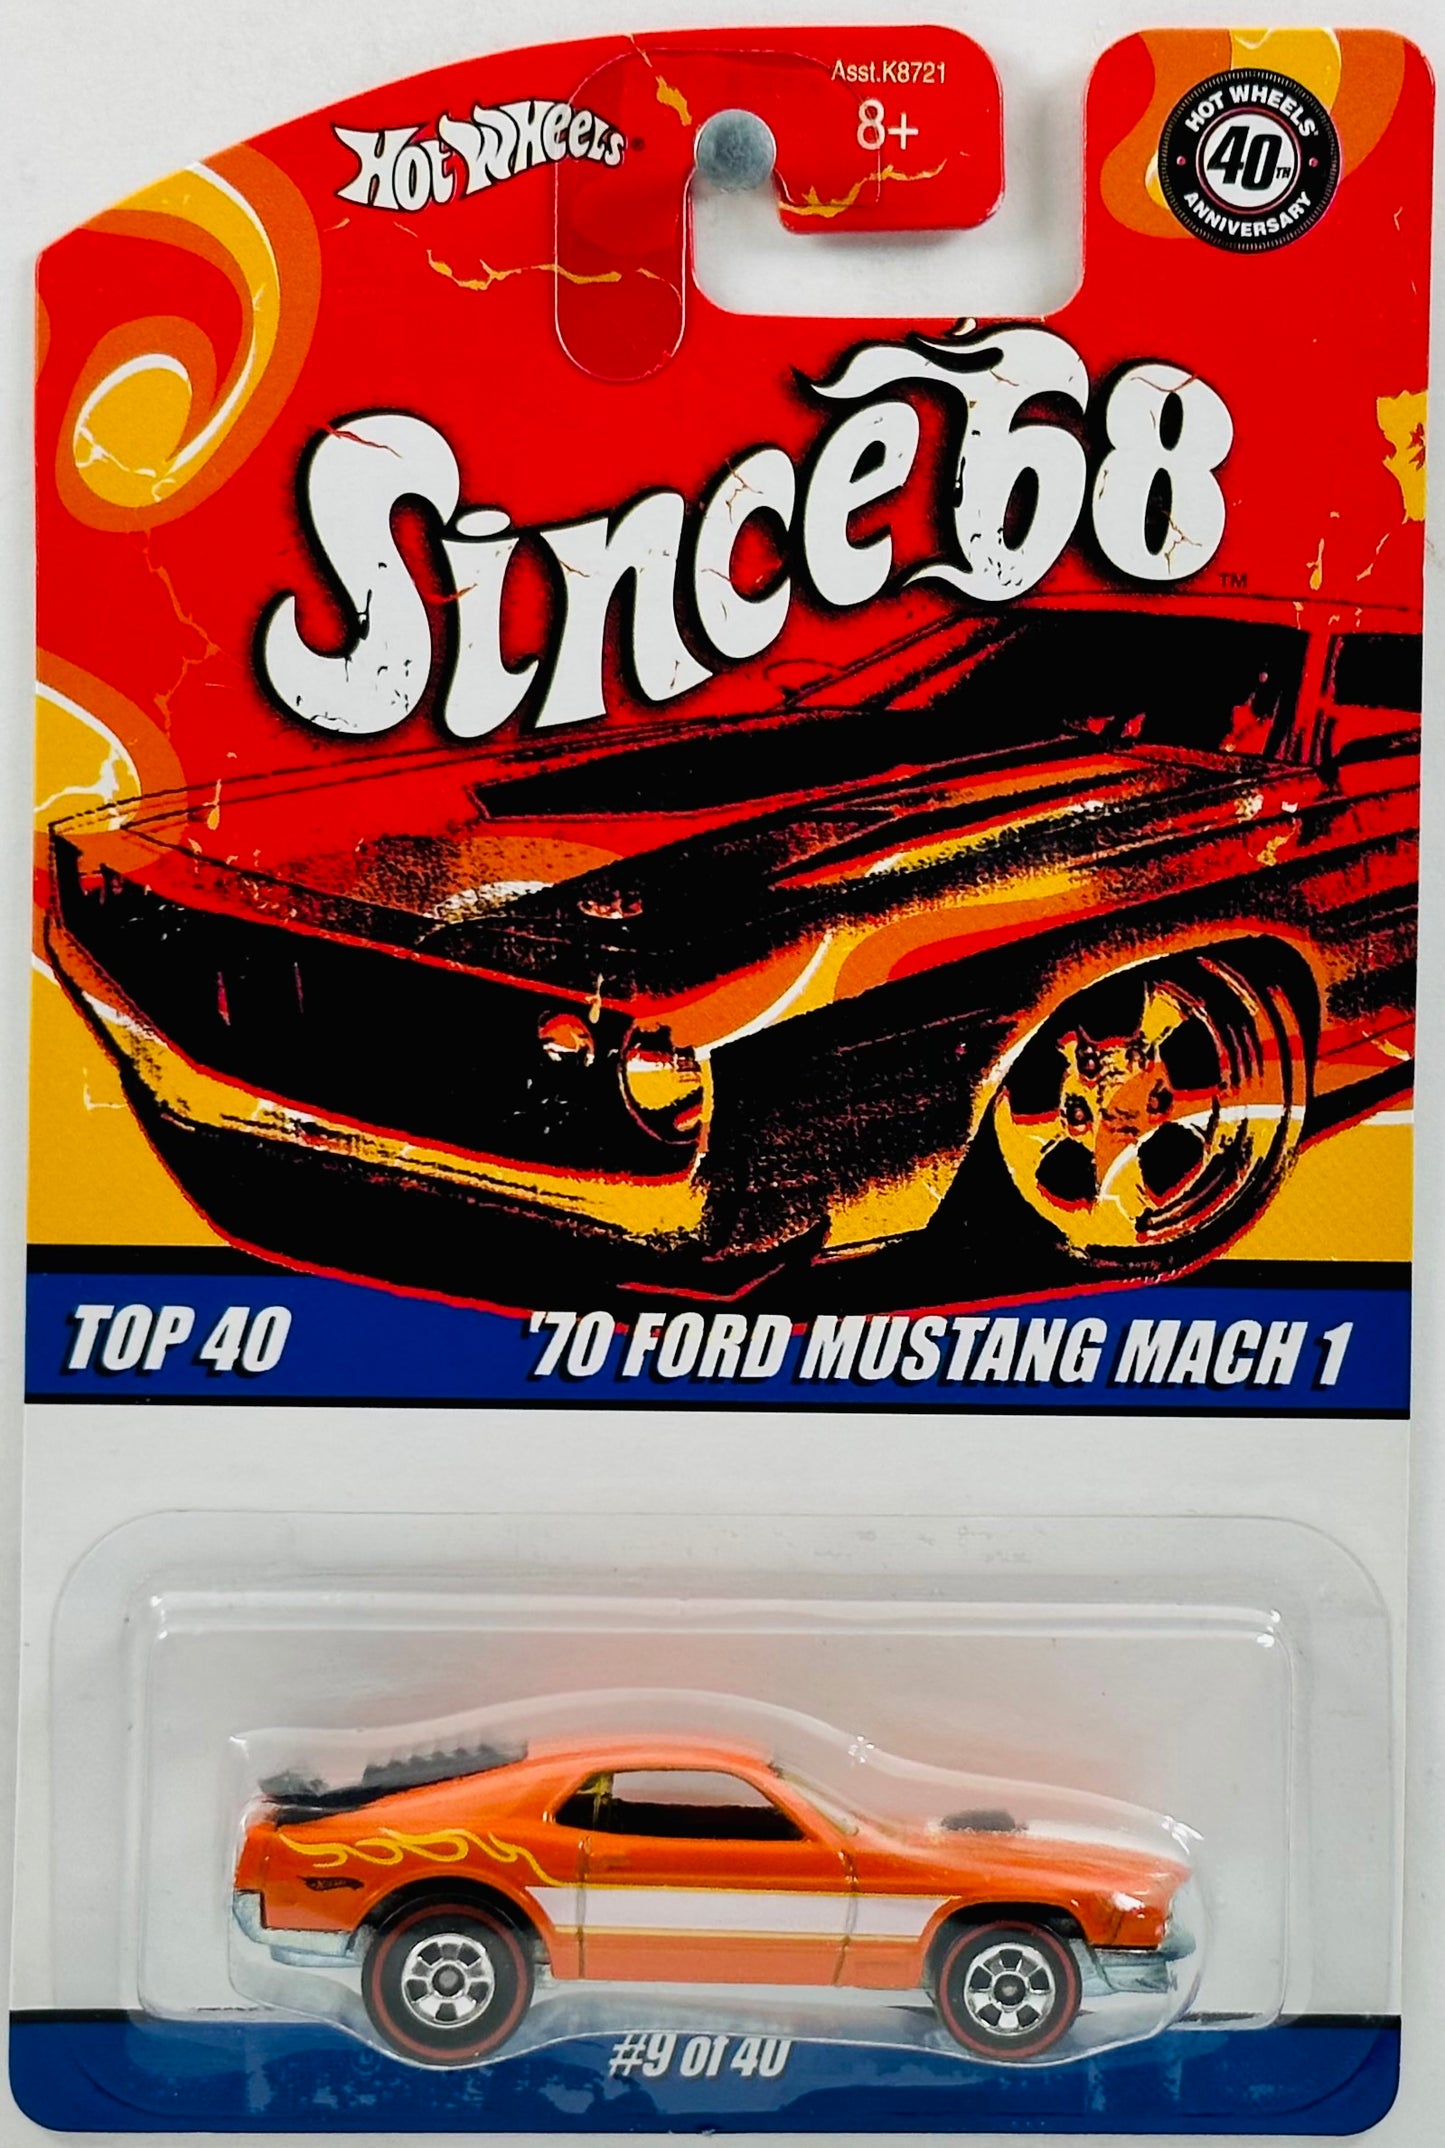 Hot Wheels 2008 - Since '68 / Top 40 # 09/40 - '70 Ford Mustang Mach 1 - Orange - Basic Wheels on Red Lines - Metal/Metal